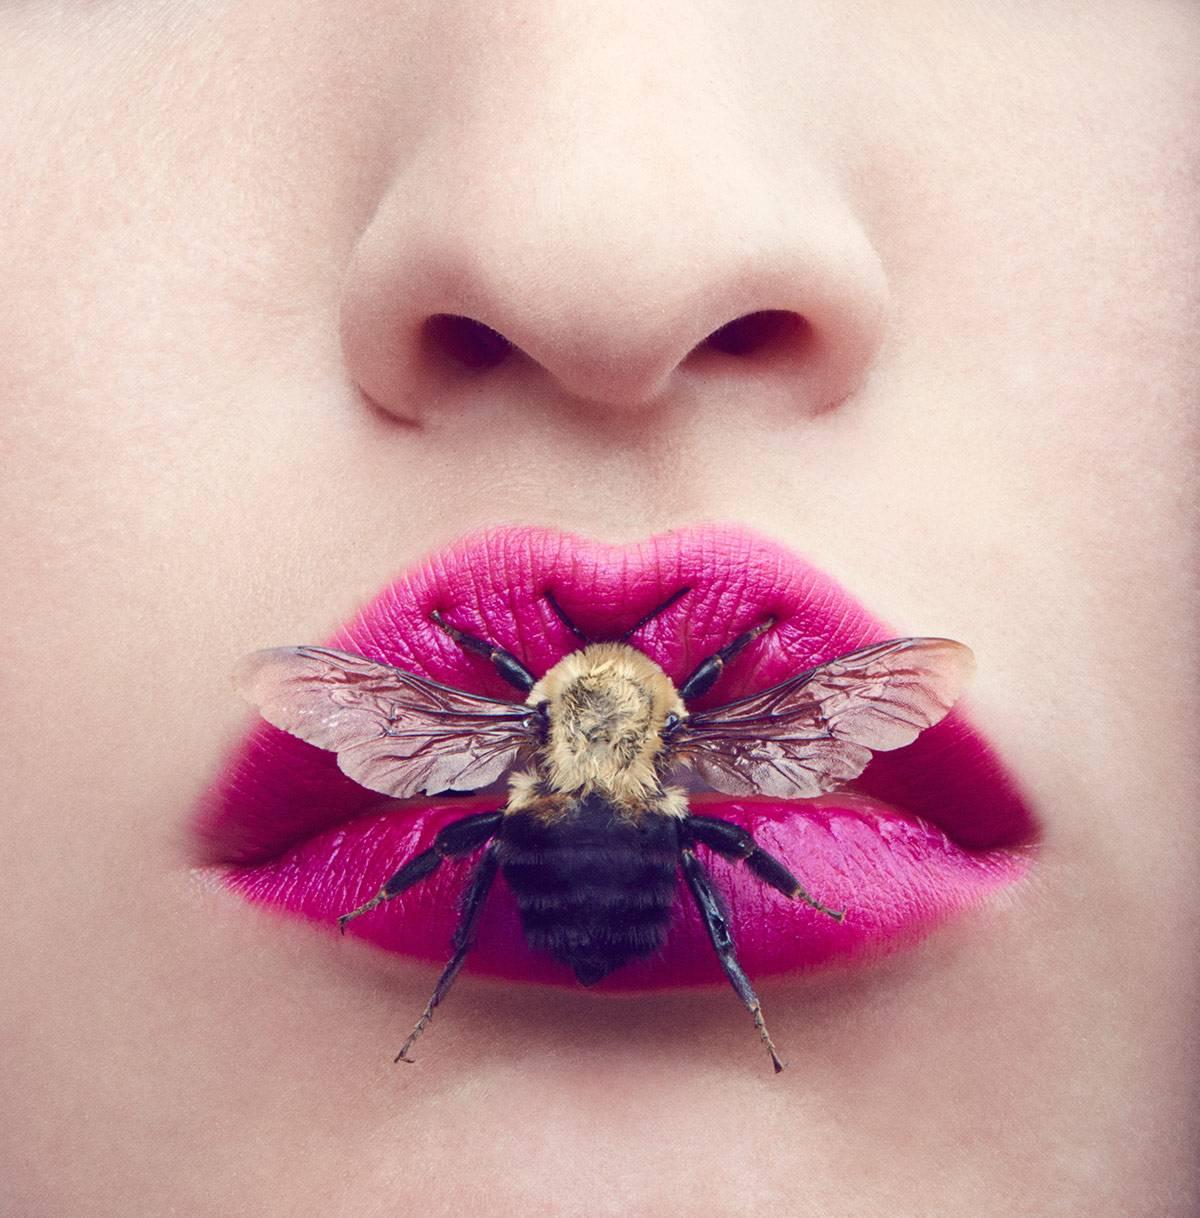 Color Photograph Amanda Pratt - Beauty Bug